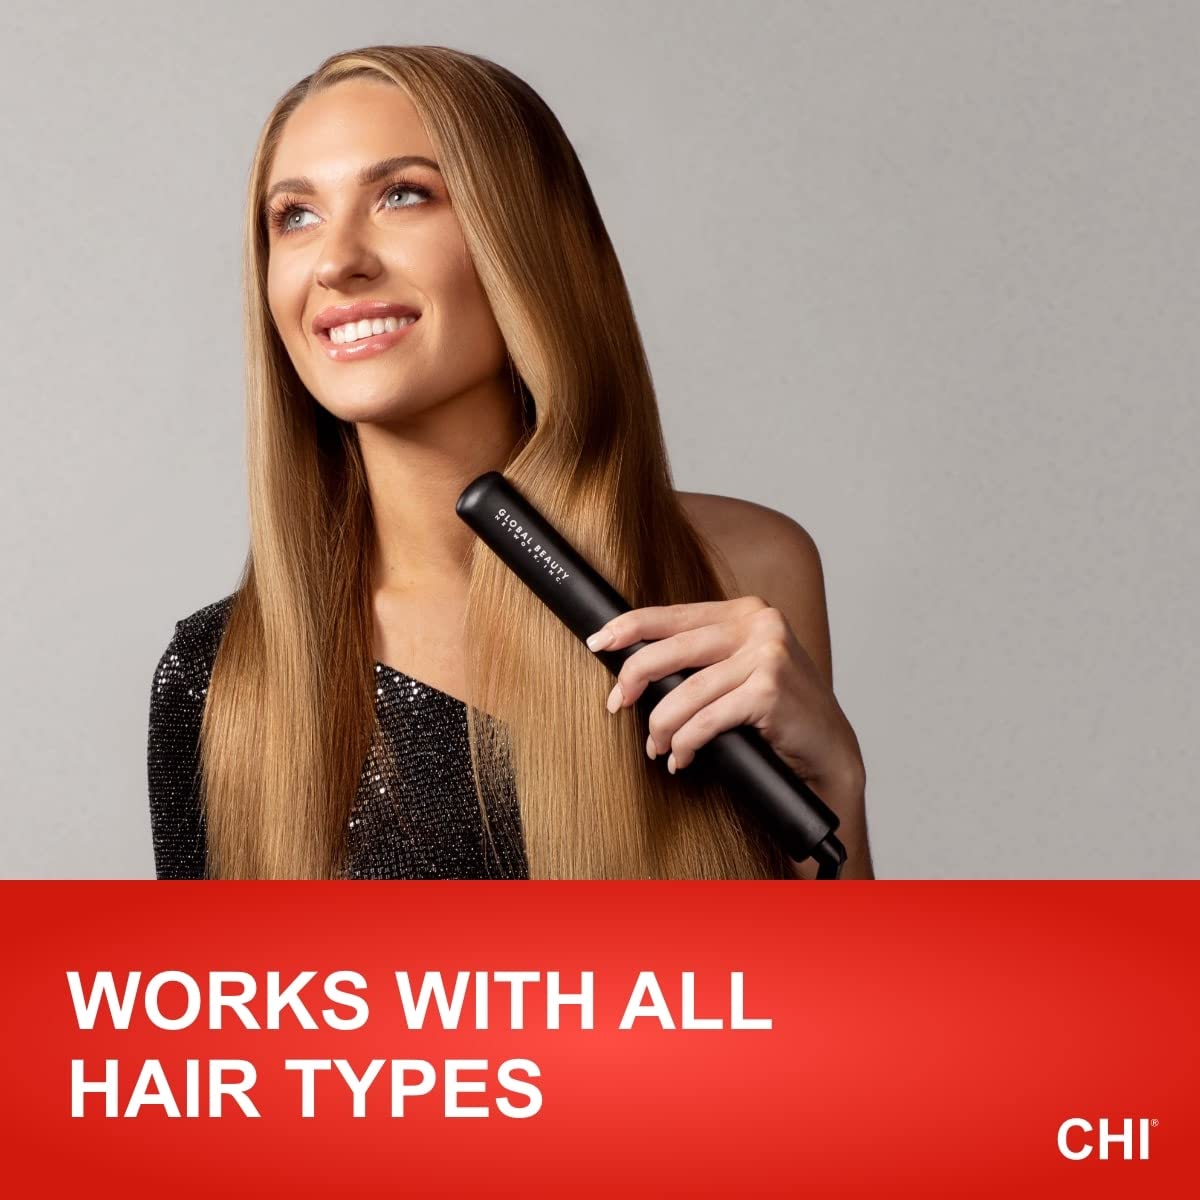 CHI Original Ceramic Hair Straightening Flat Iron | 1